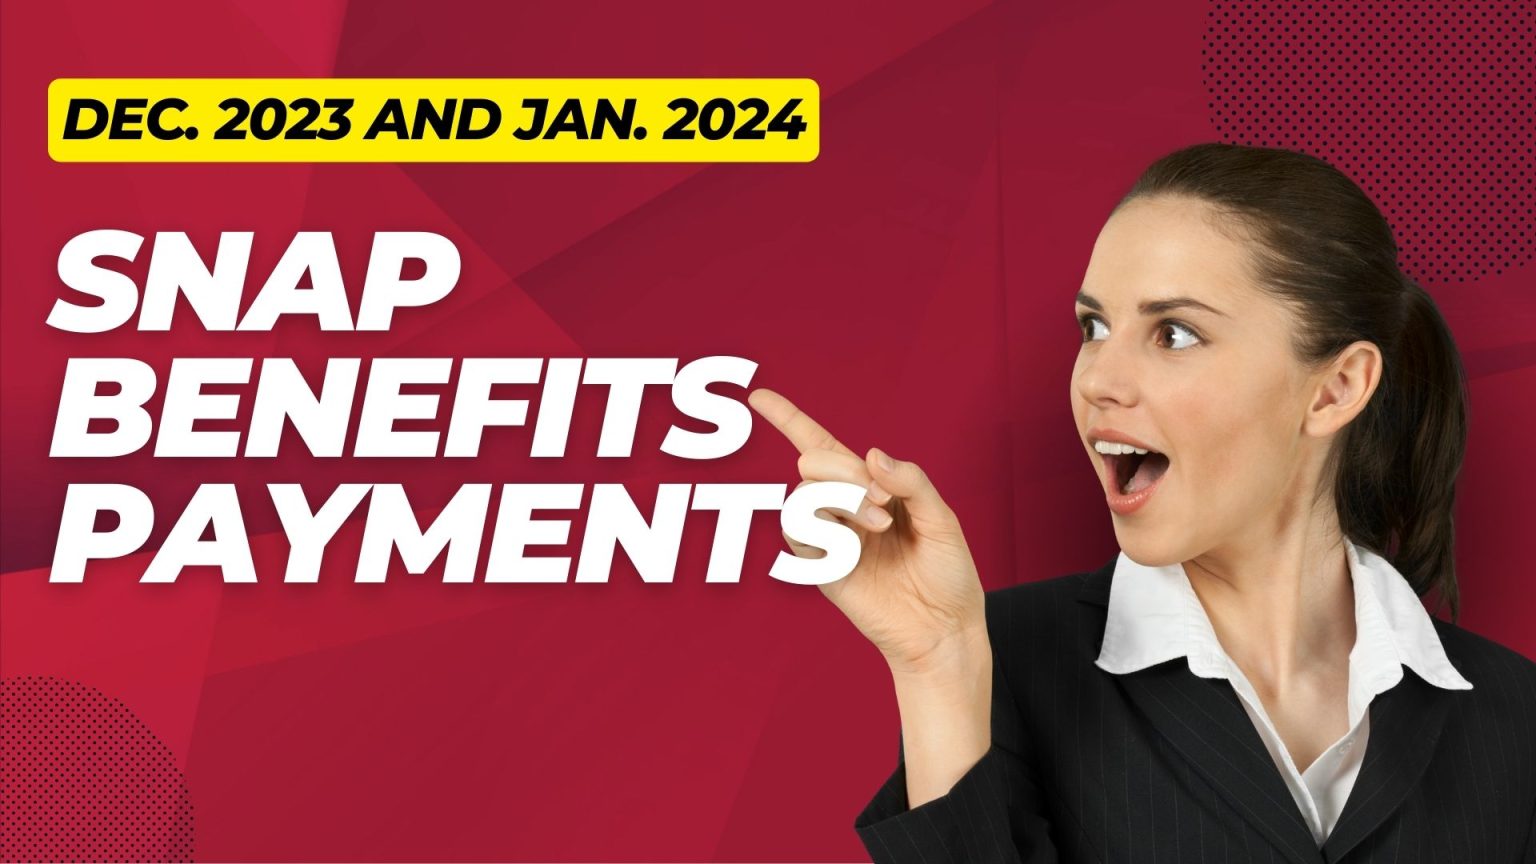 Dec. 2023 and Jan. 2024 SNAP Benefits Dates in Missouri